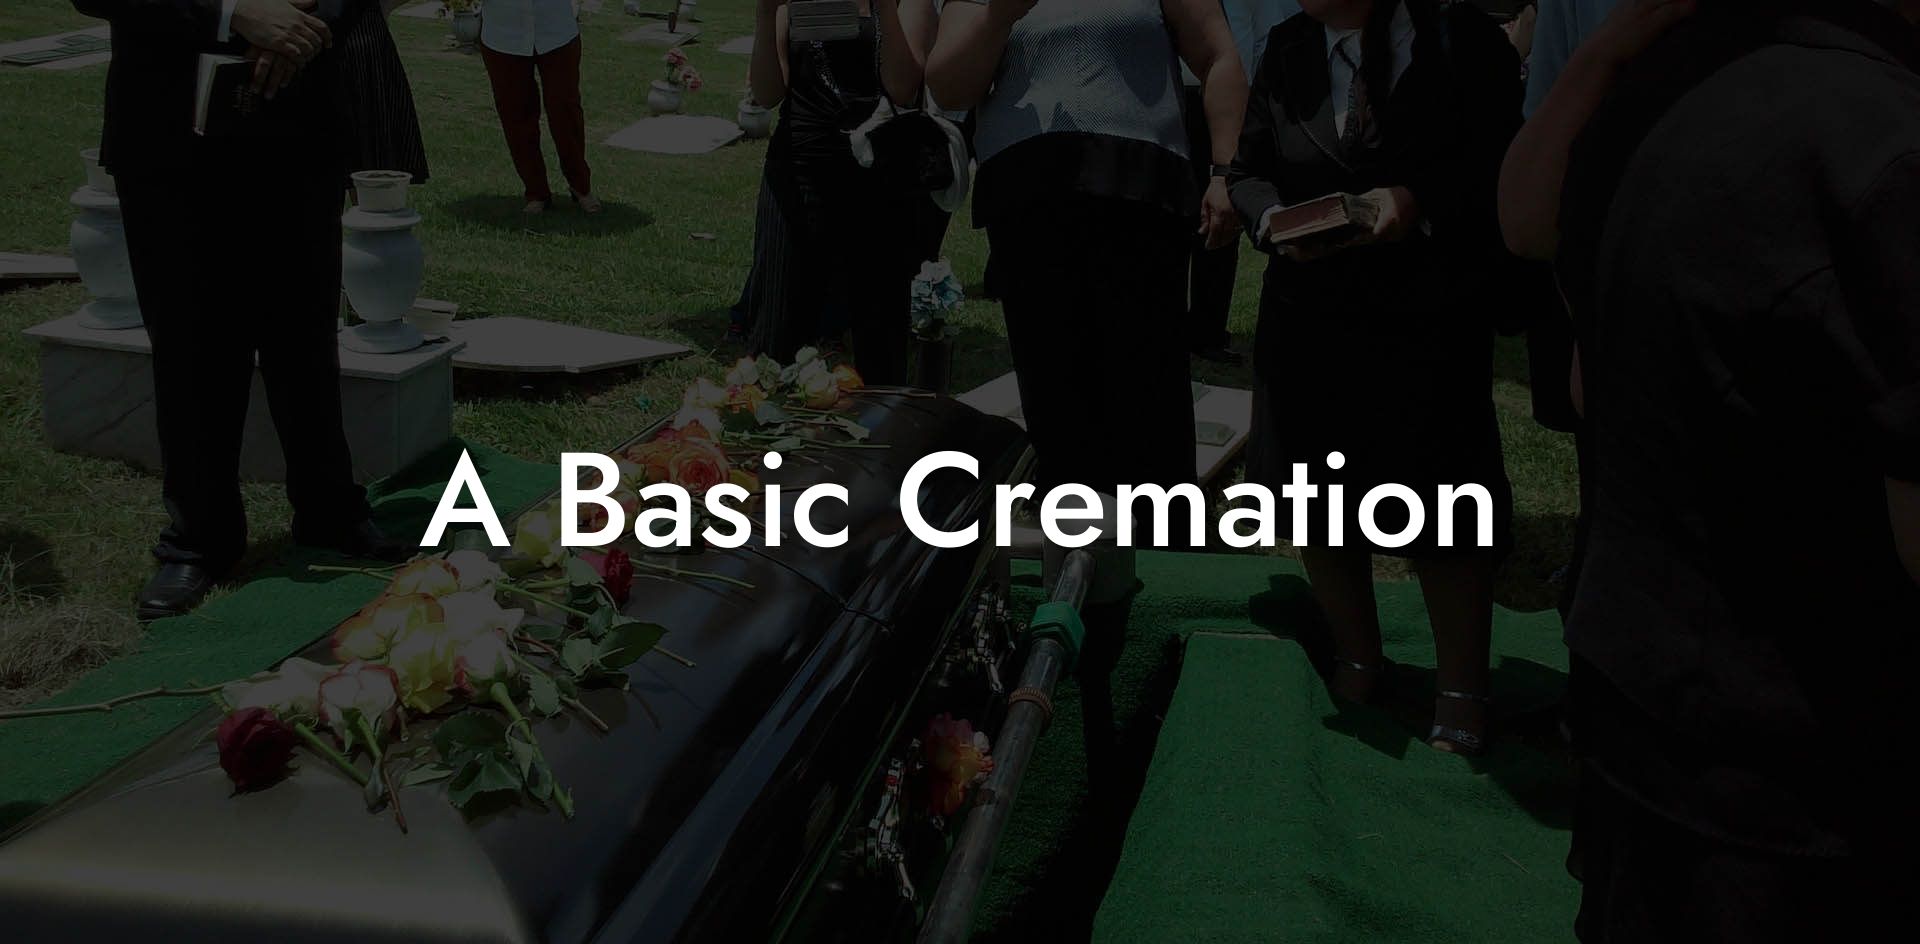 A Basic Cremation